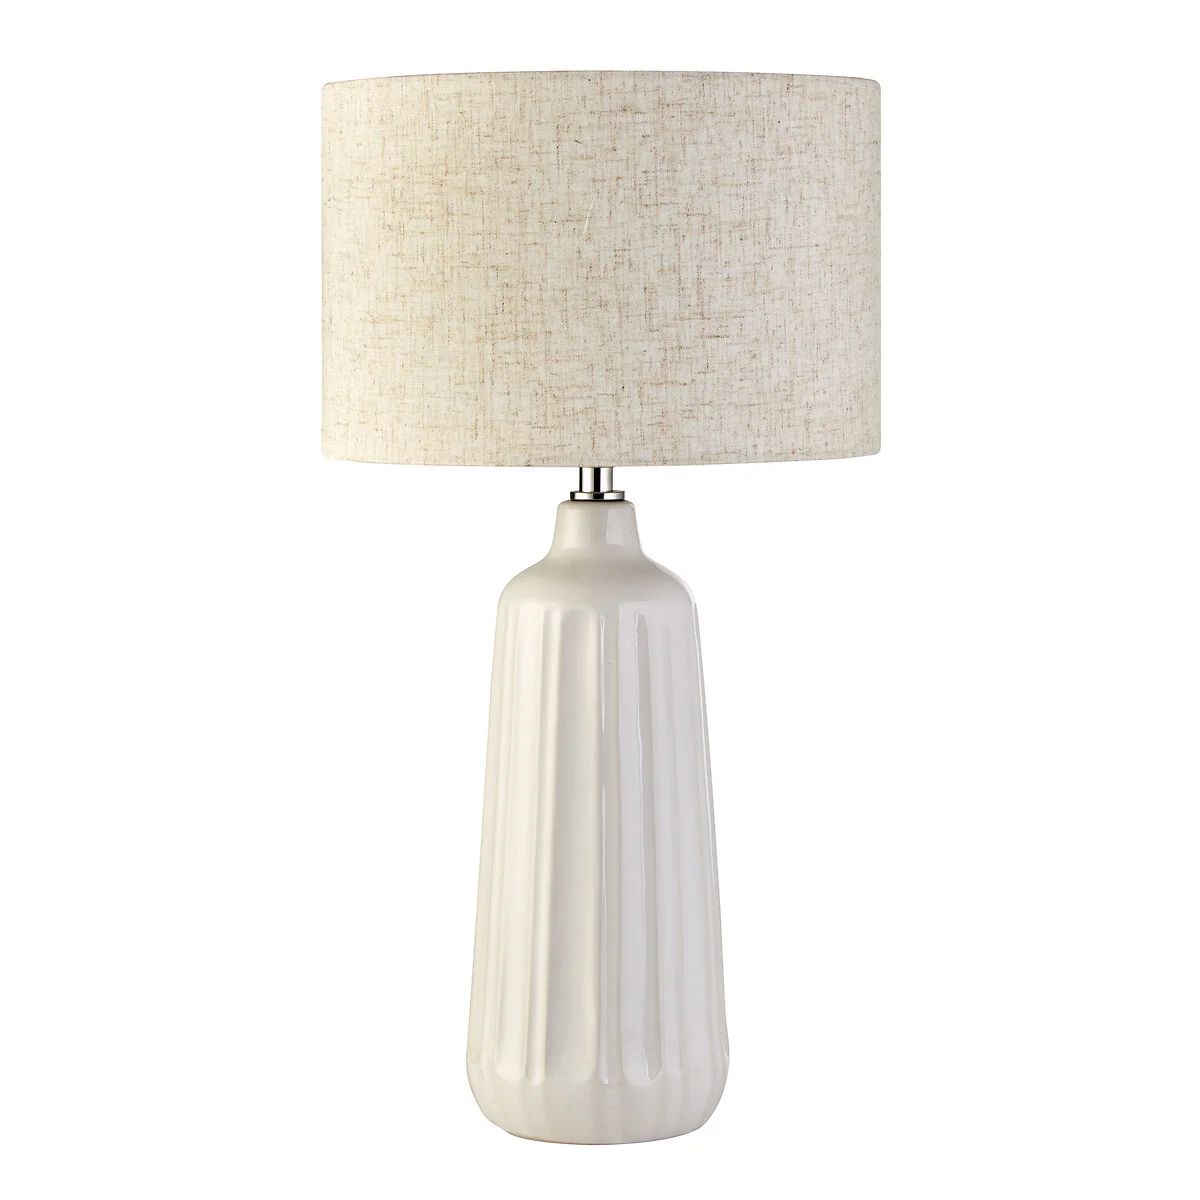 White Textured Ceramic Table Lamp with Cream Shade | La Redoute (UK)